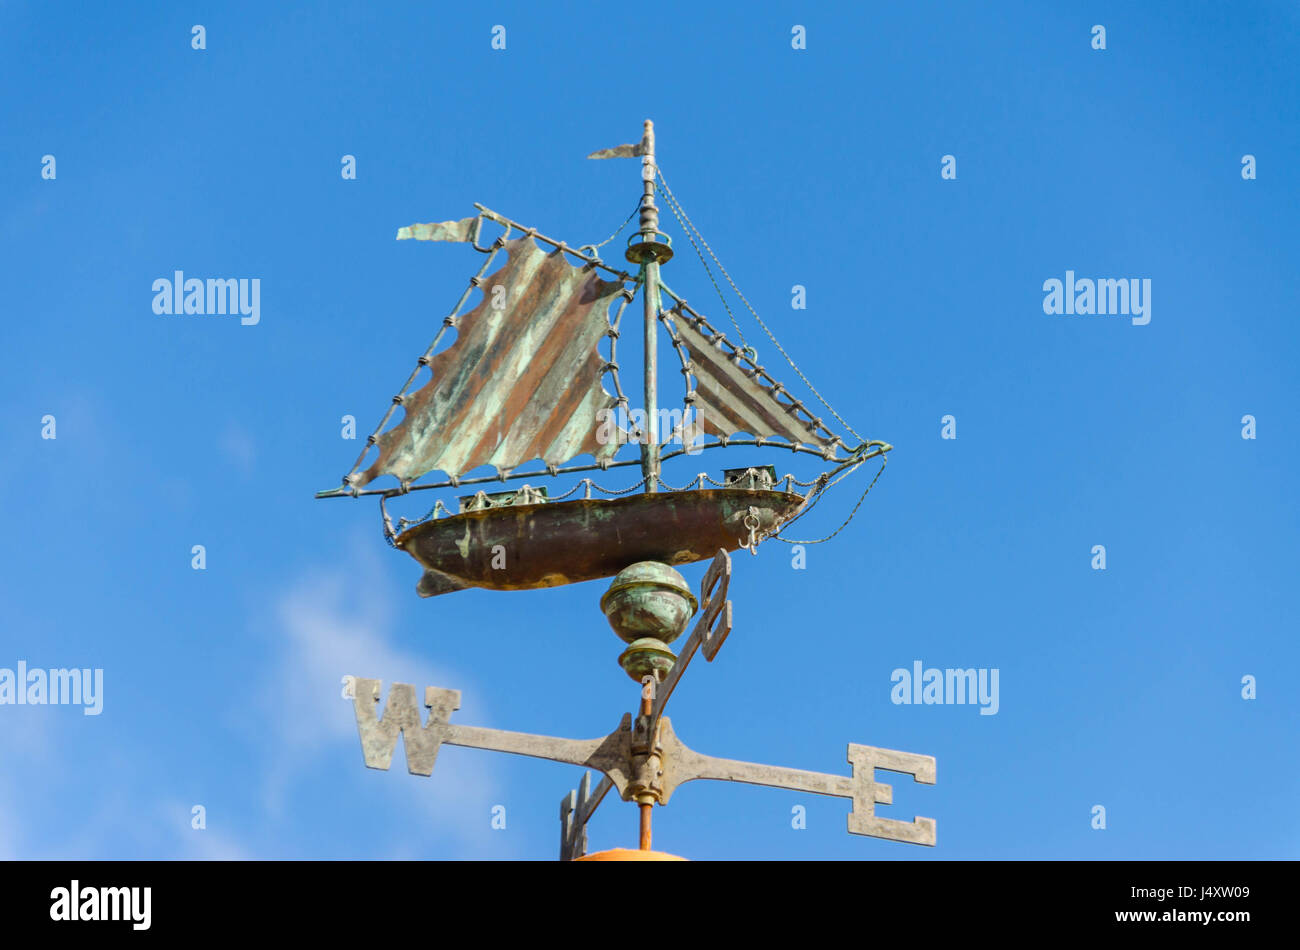 Saleboat Weather vane against blue sky Stock Photo